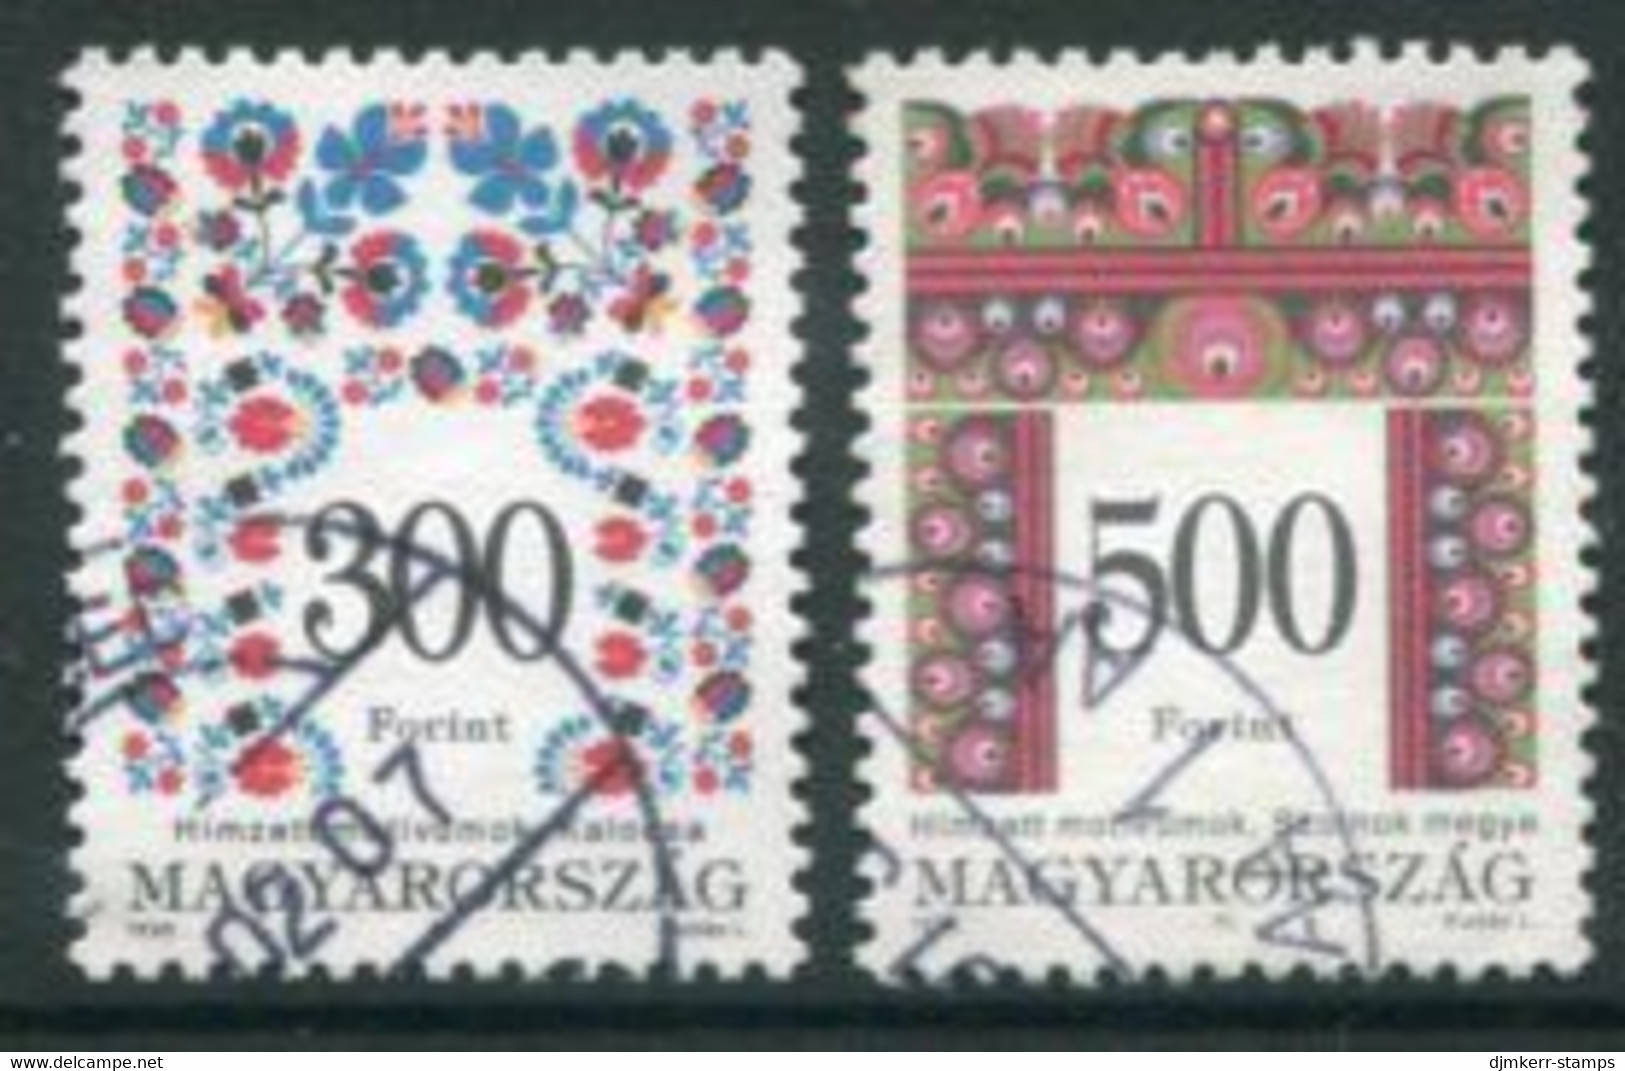 HUNGARY 1996 Folk Motif 300 And 500 Ft.  Used.  Michel 4409-10 - Gebruikt